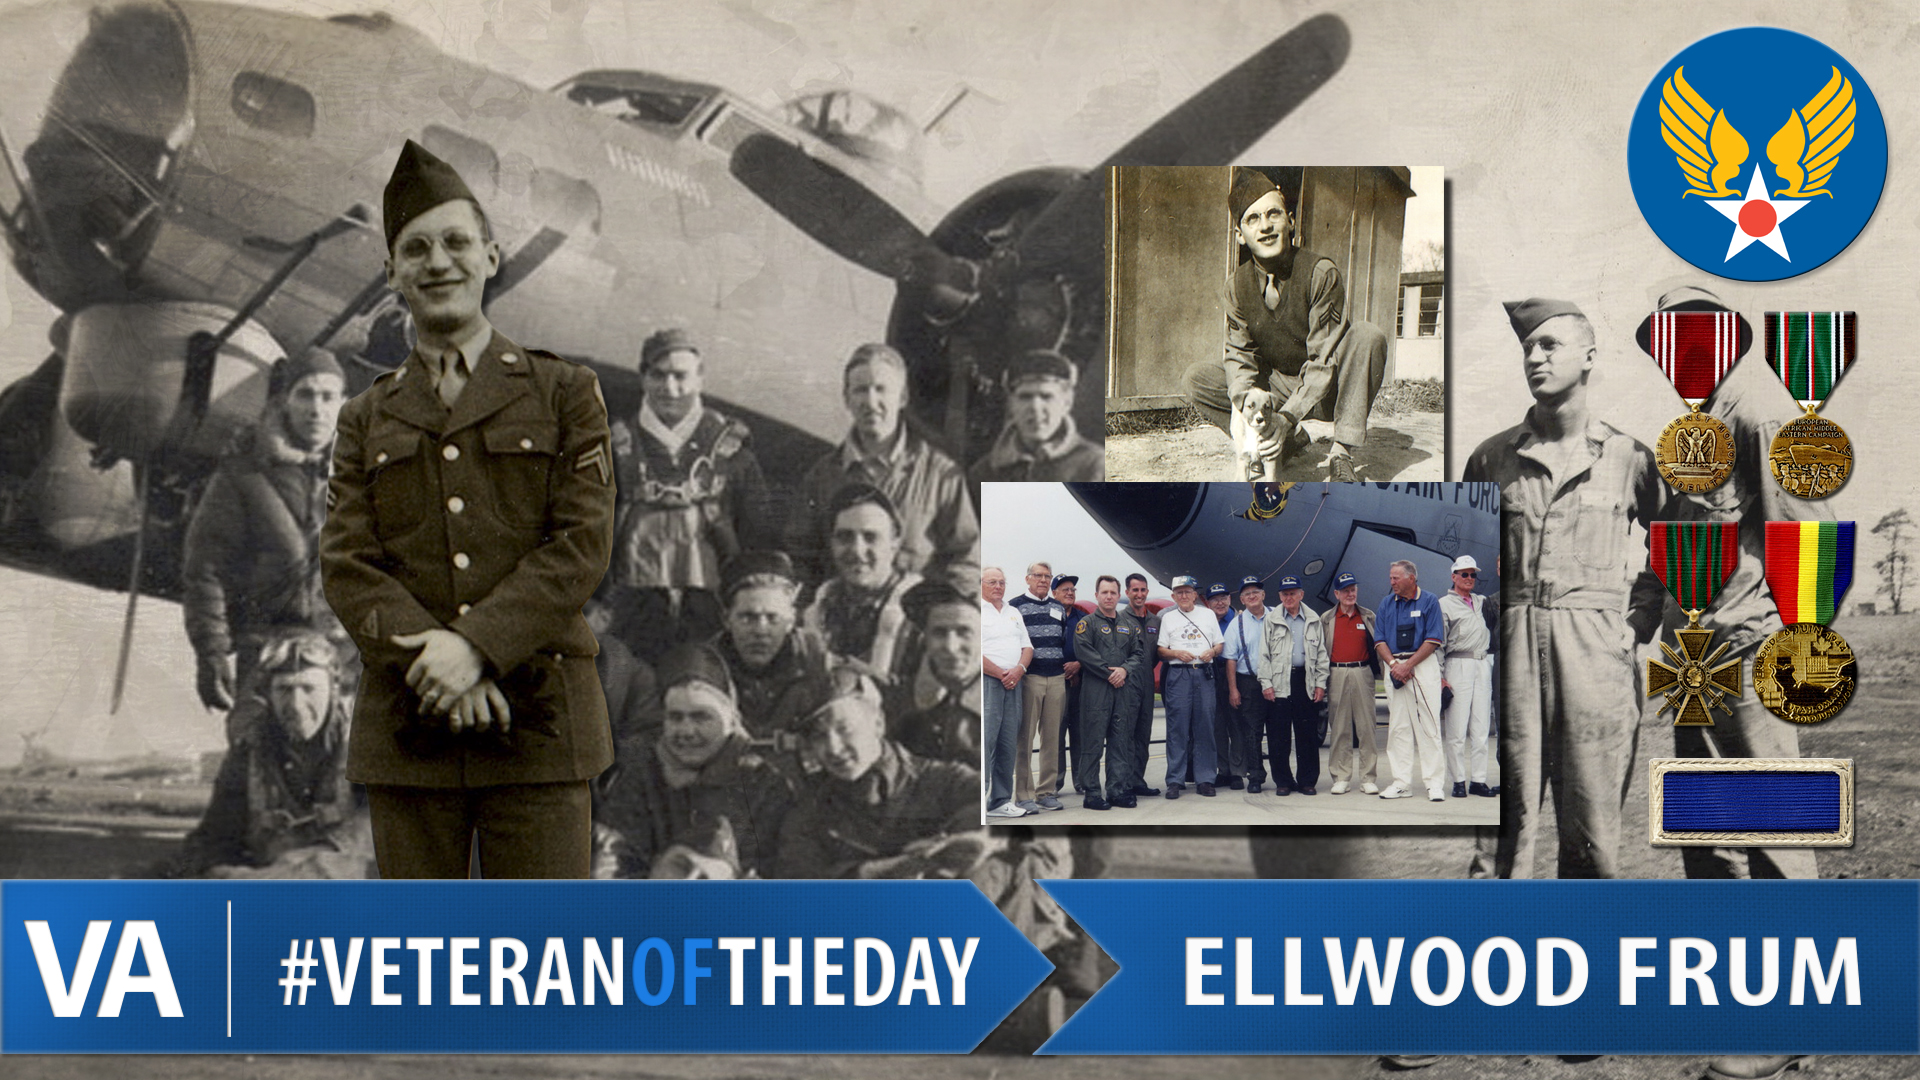 Ellwood Frum - Veteran of the Day